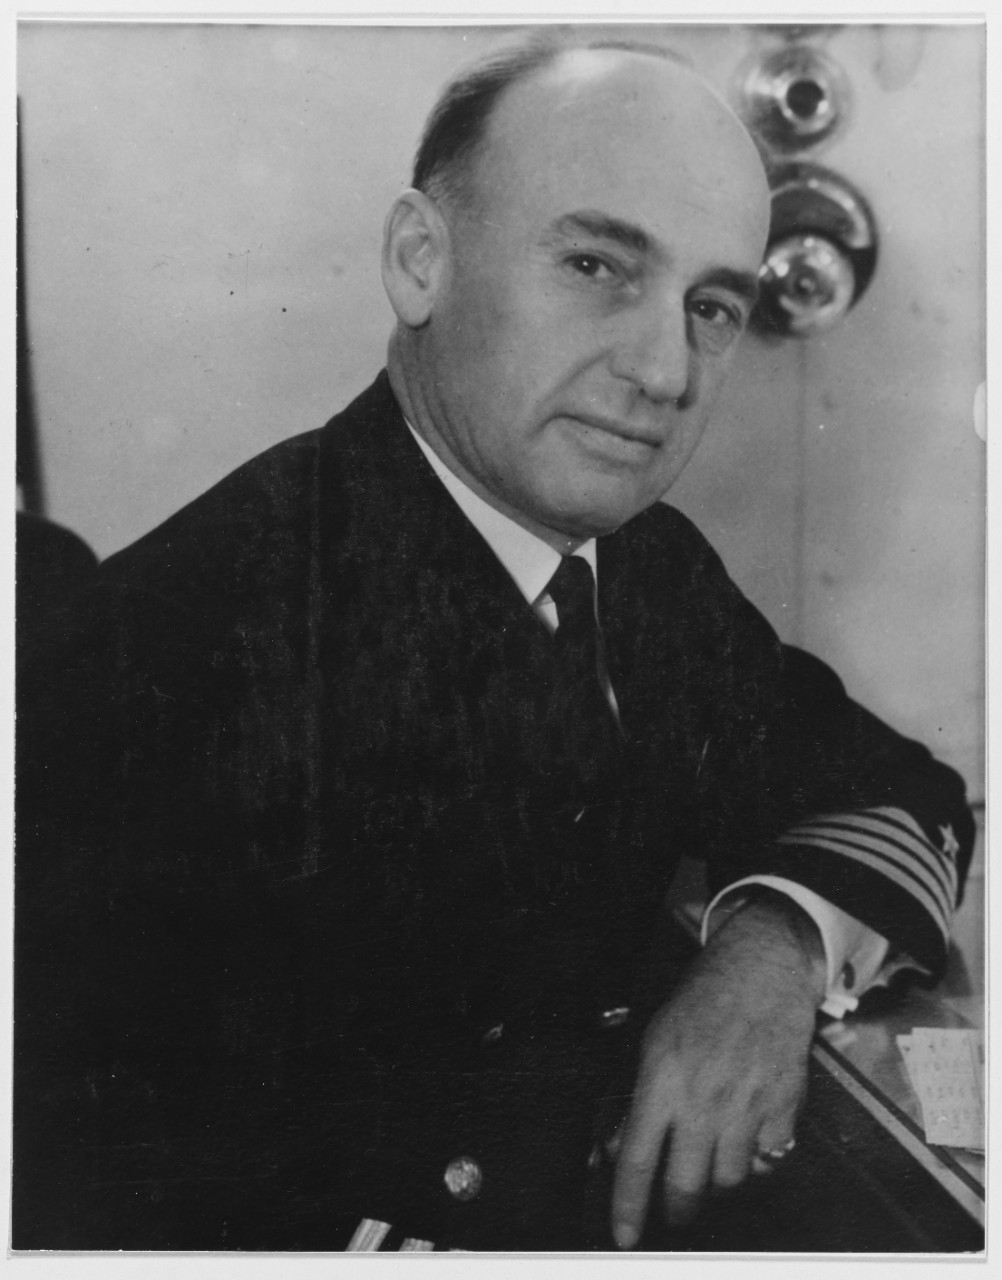 Captain Charles C. Gill, USN